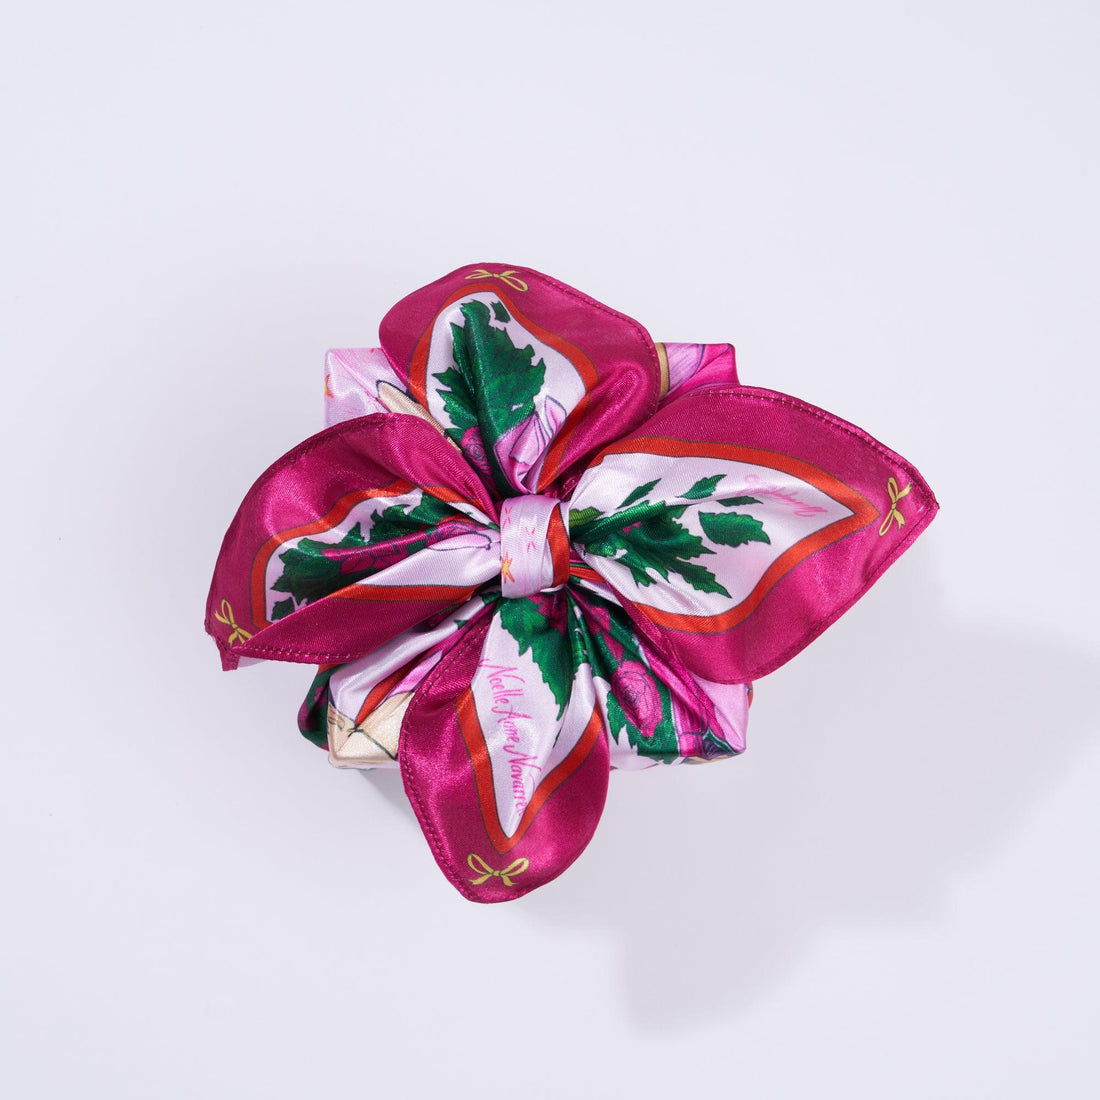 Dazzling | 18" Furoshiki Gift Wrap by Noelle Anne Navarrete - Wrappr